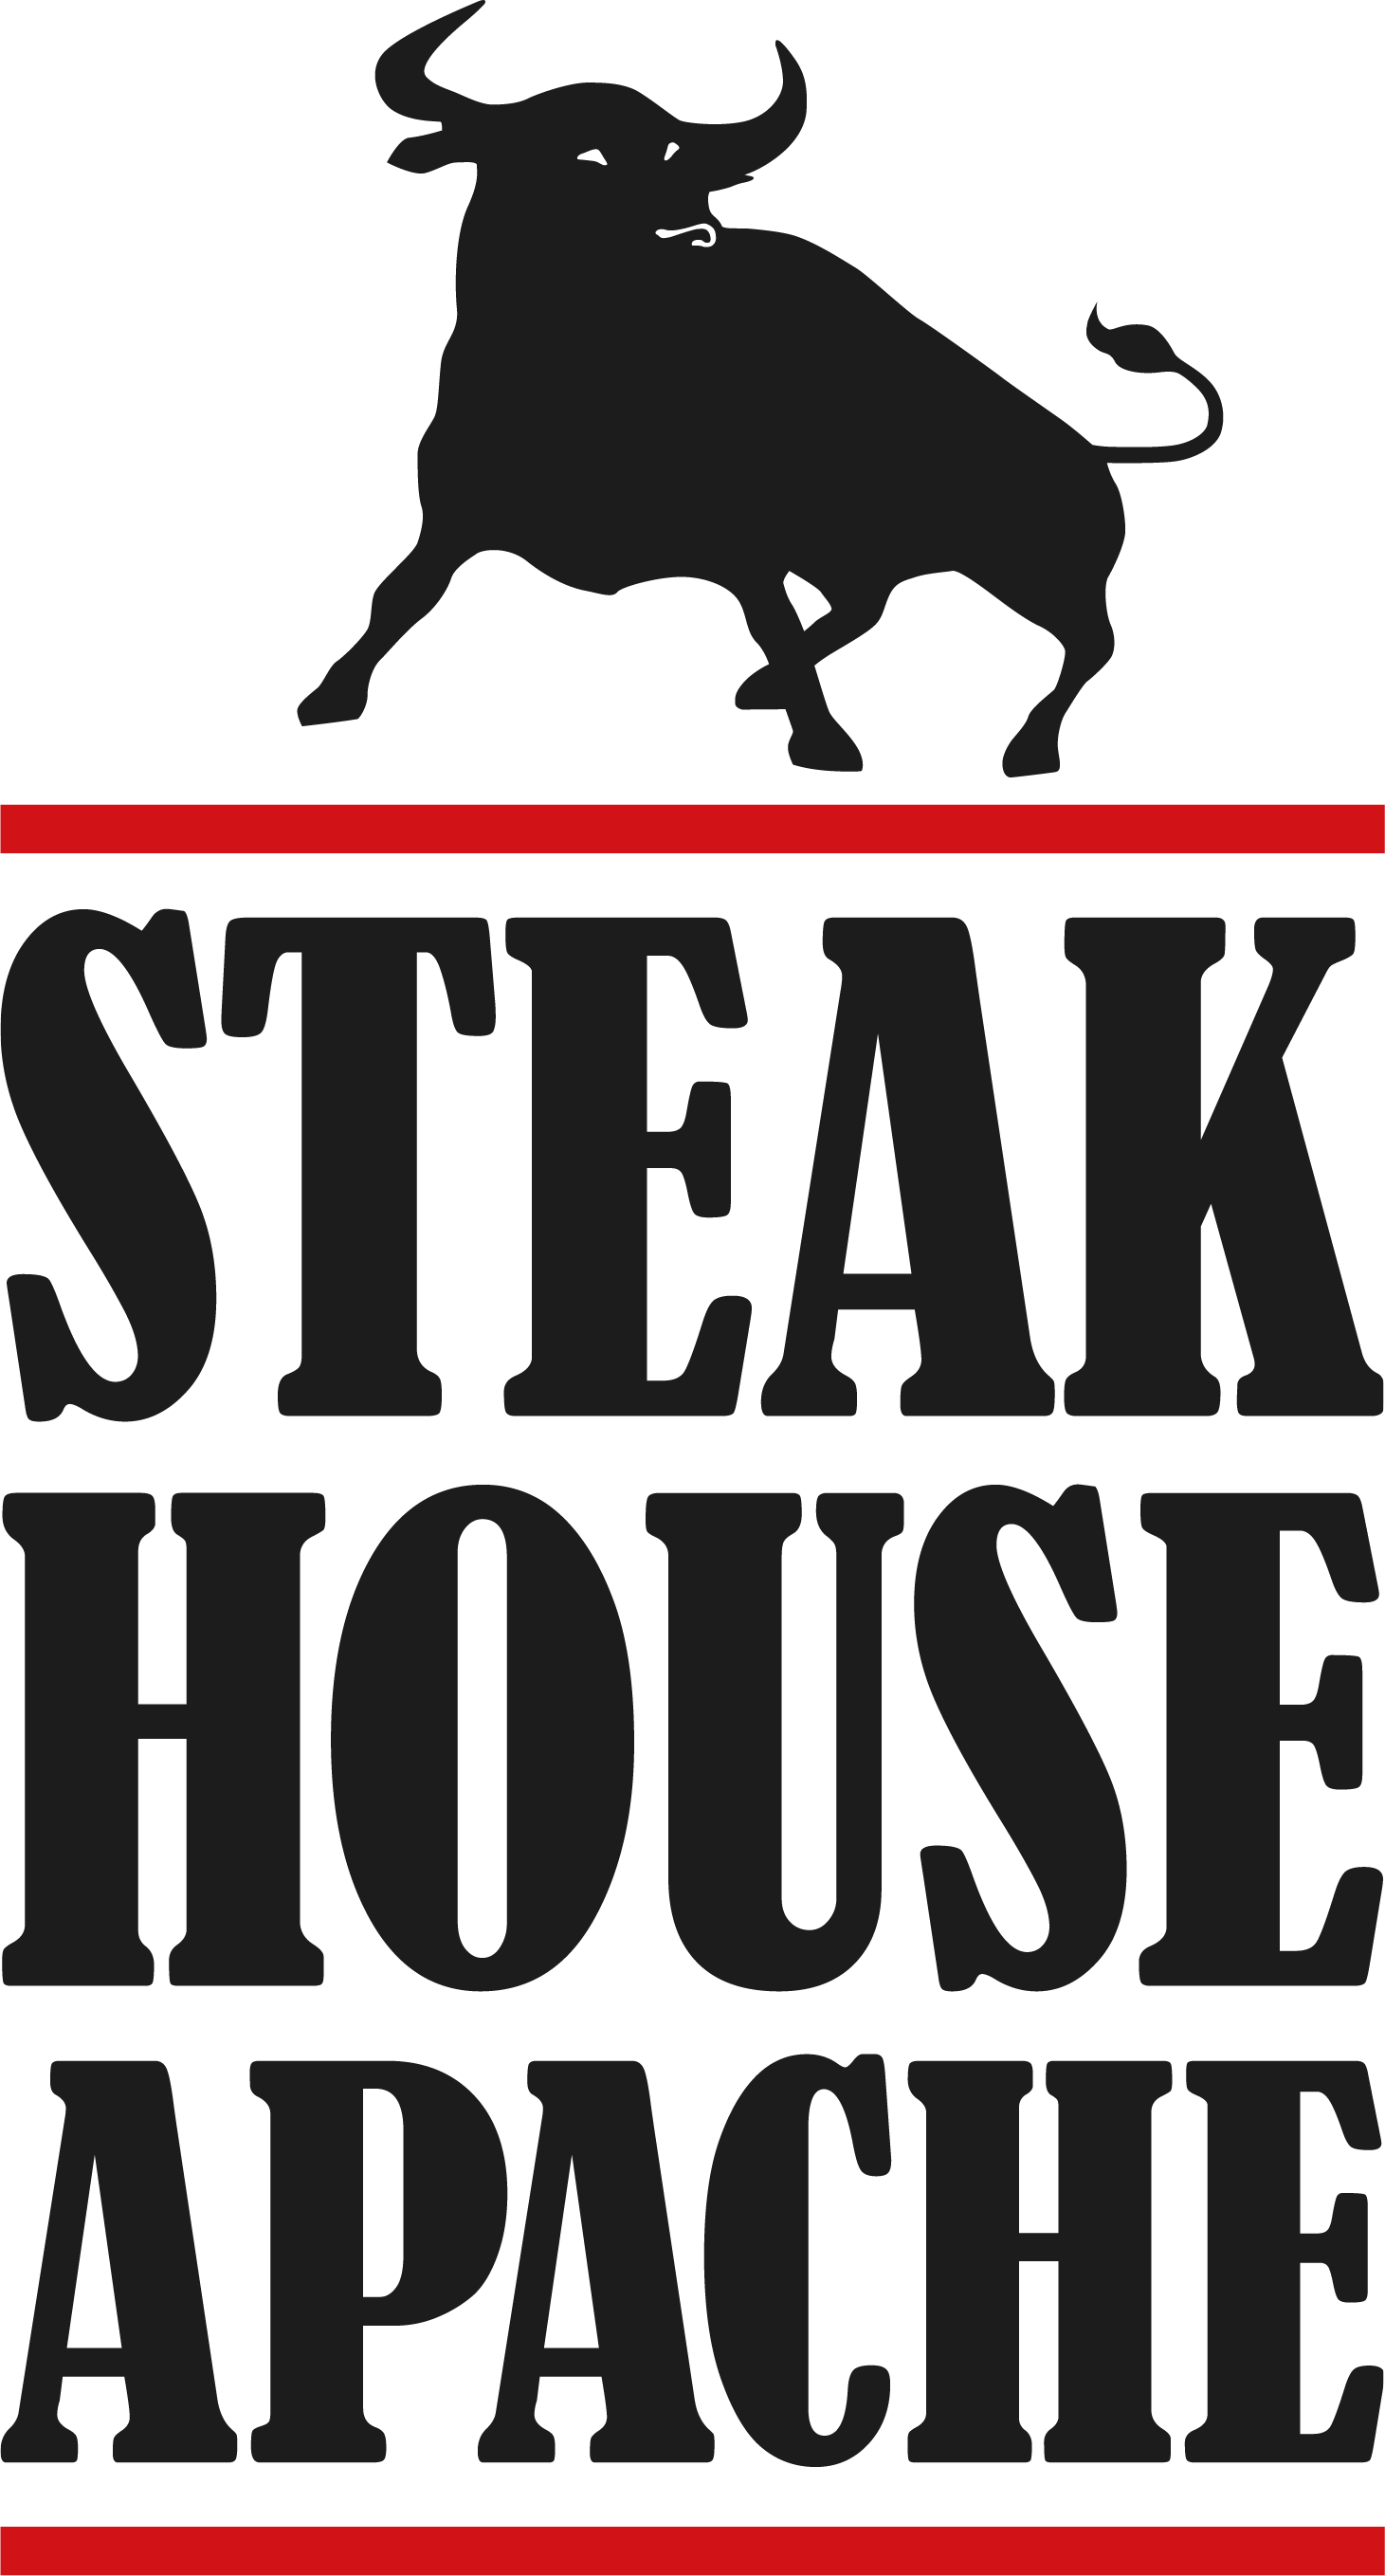 Steakhouse Apache - Ihr Steakhouse in Celle